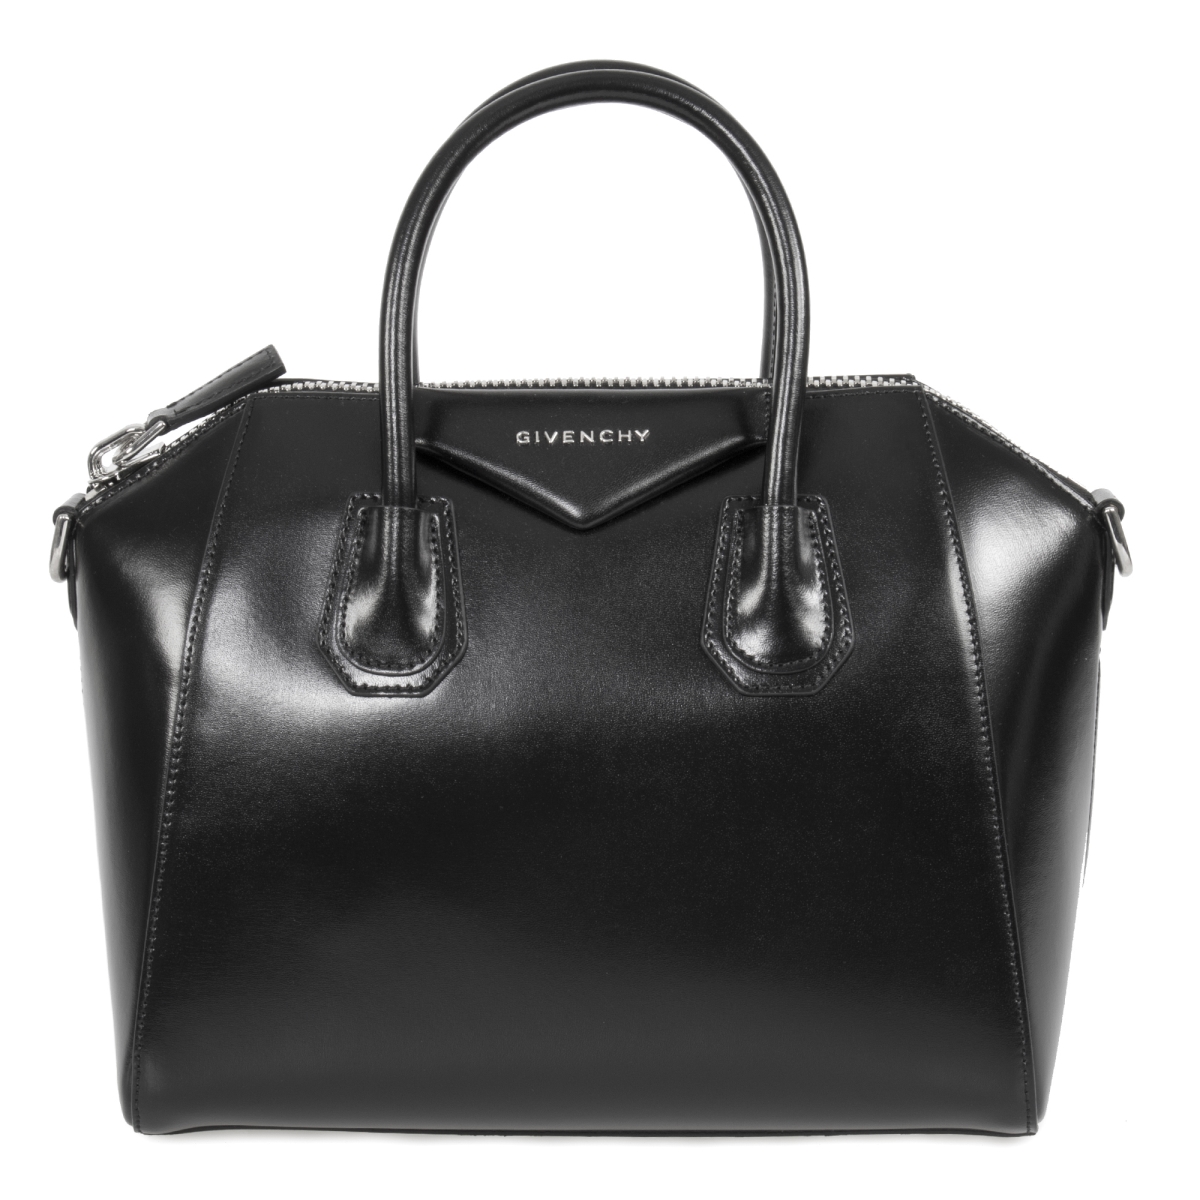 Picture of Givenchy GVY-HBAG-ANTI-BLK-SVR-DET-S Small Antigona Calfskin Leather Satchel Bag, Black with Silver Hardware